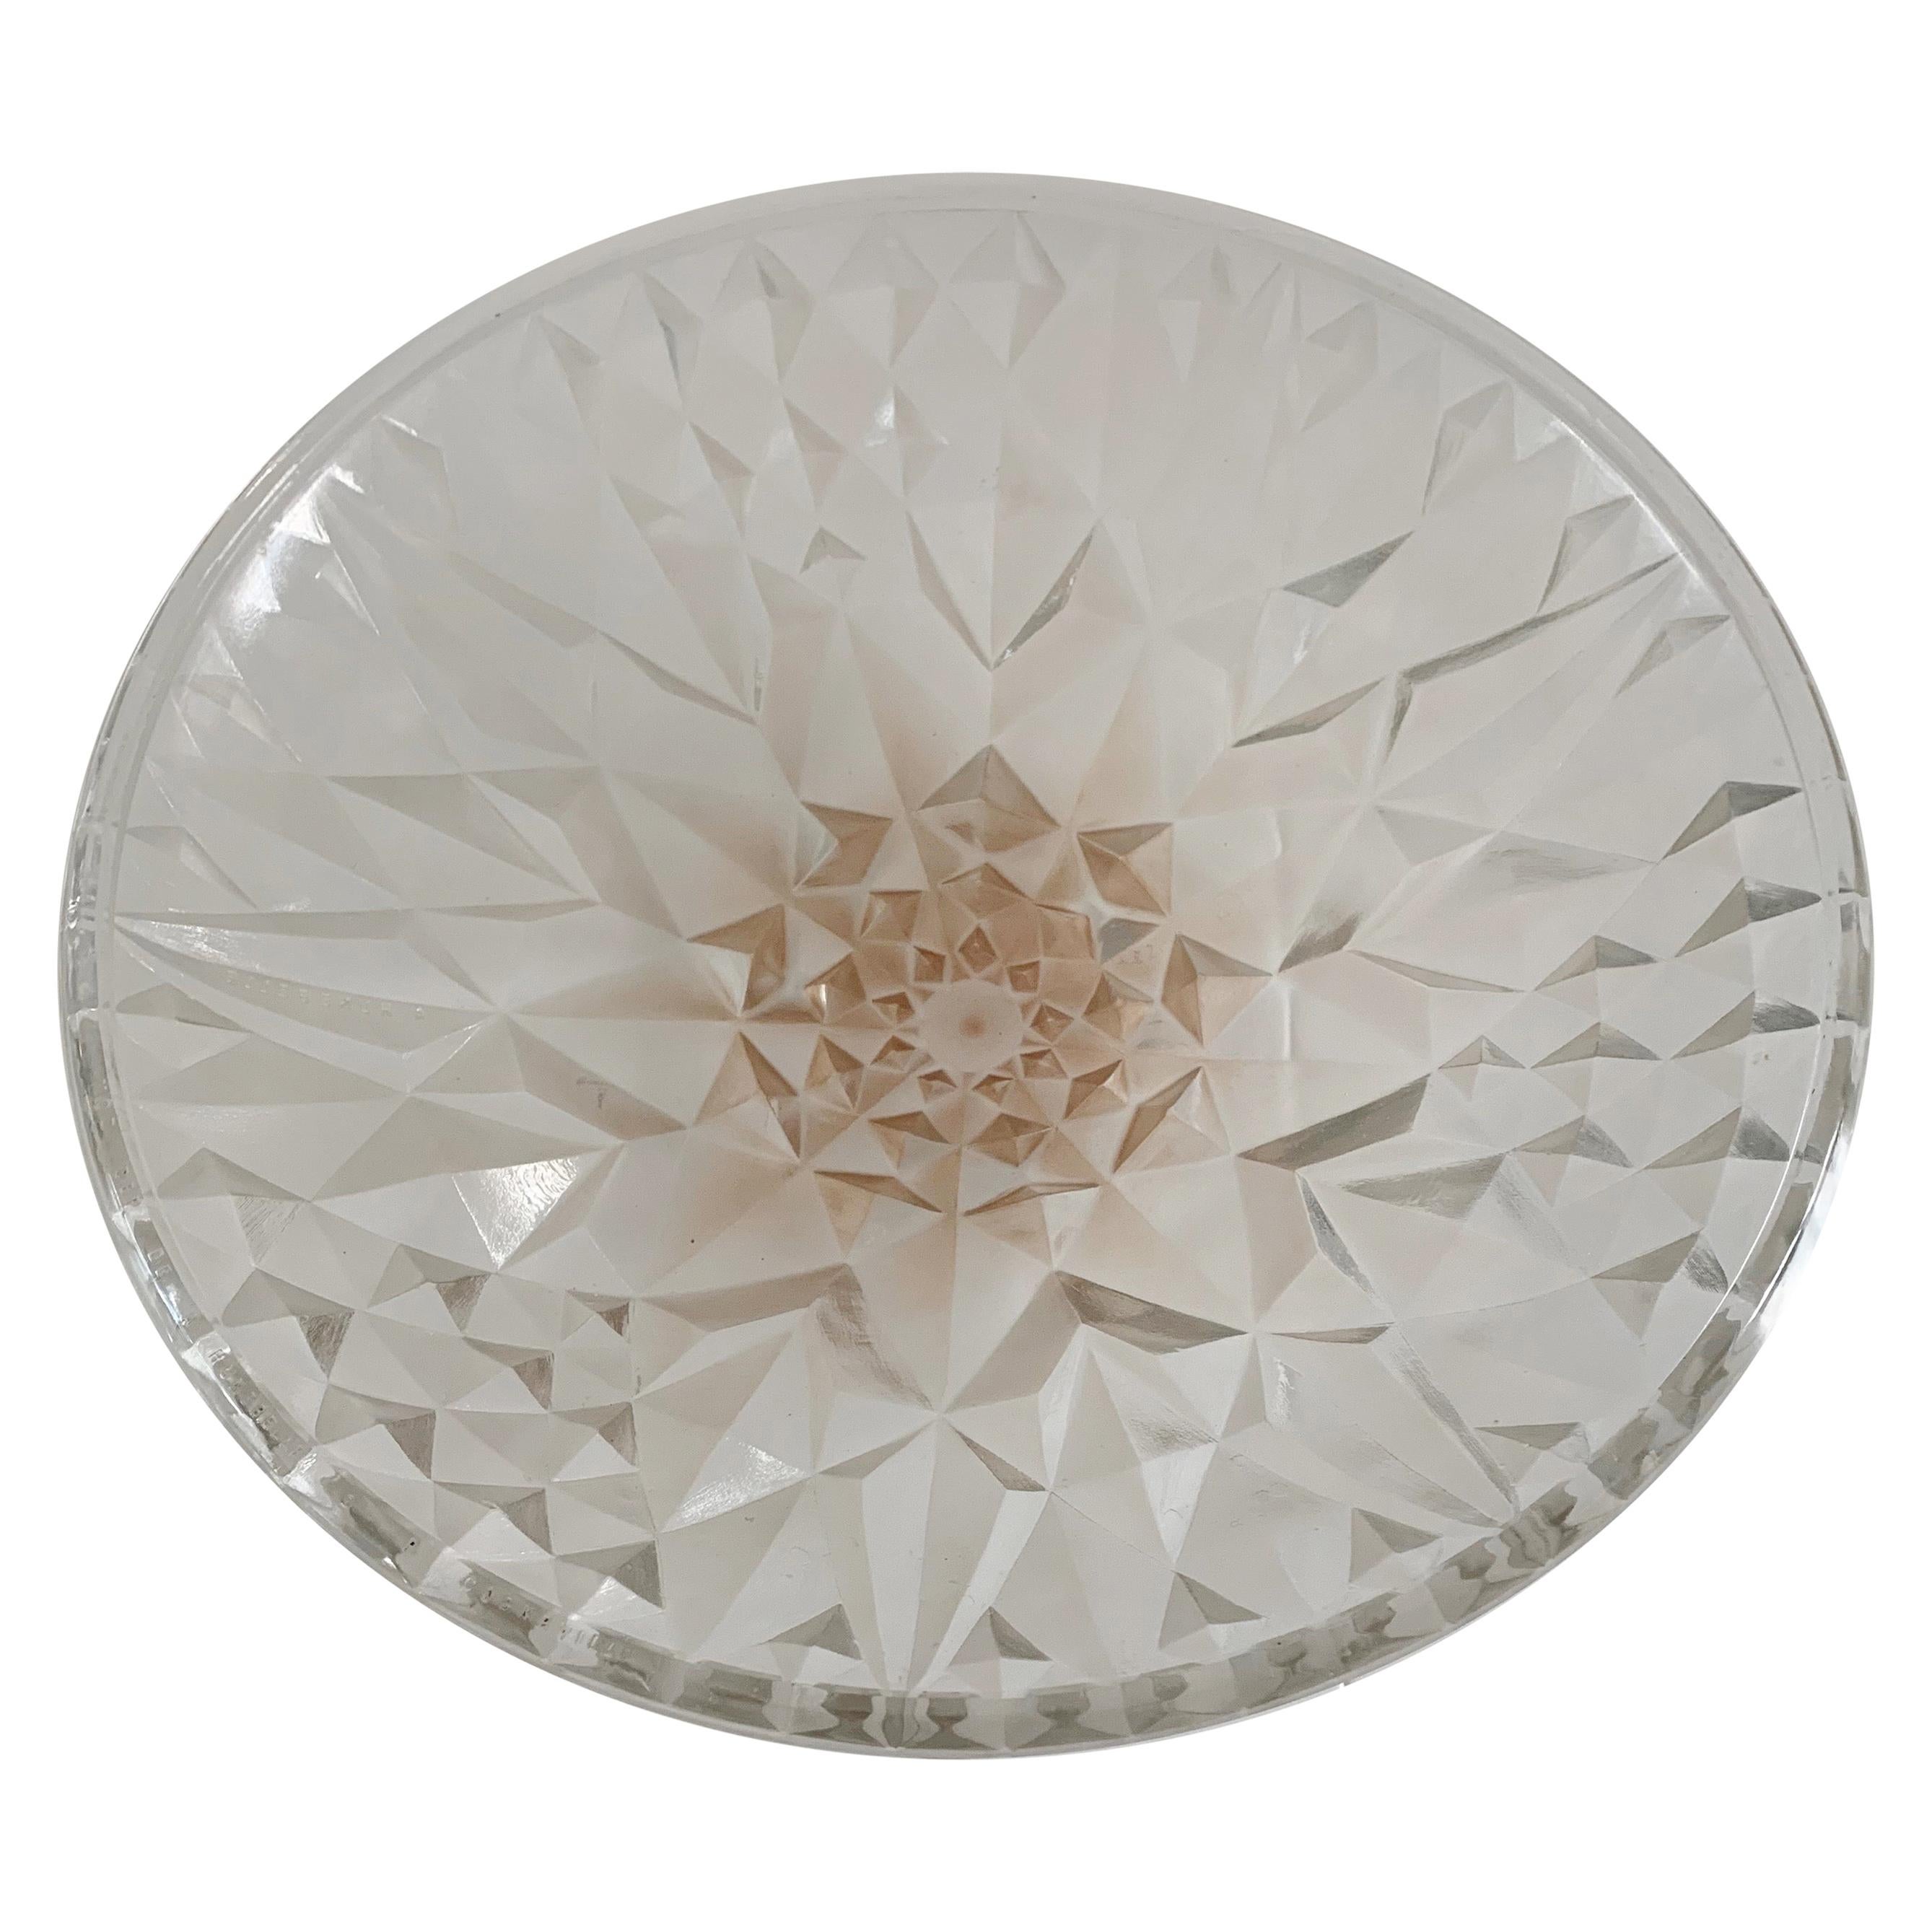 Stunning and Stylish French Art Deco Geometric Shape Glass Bowl by A. Hunebelle